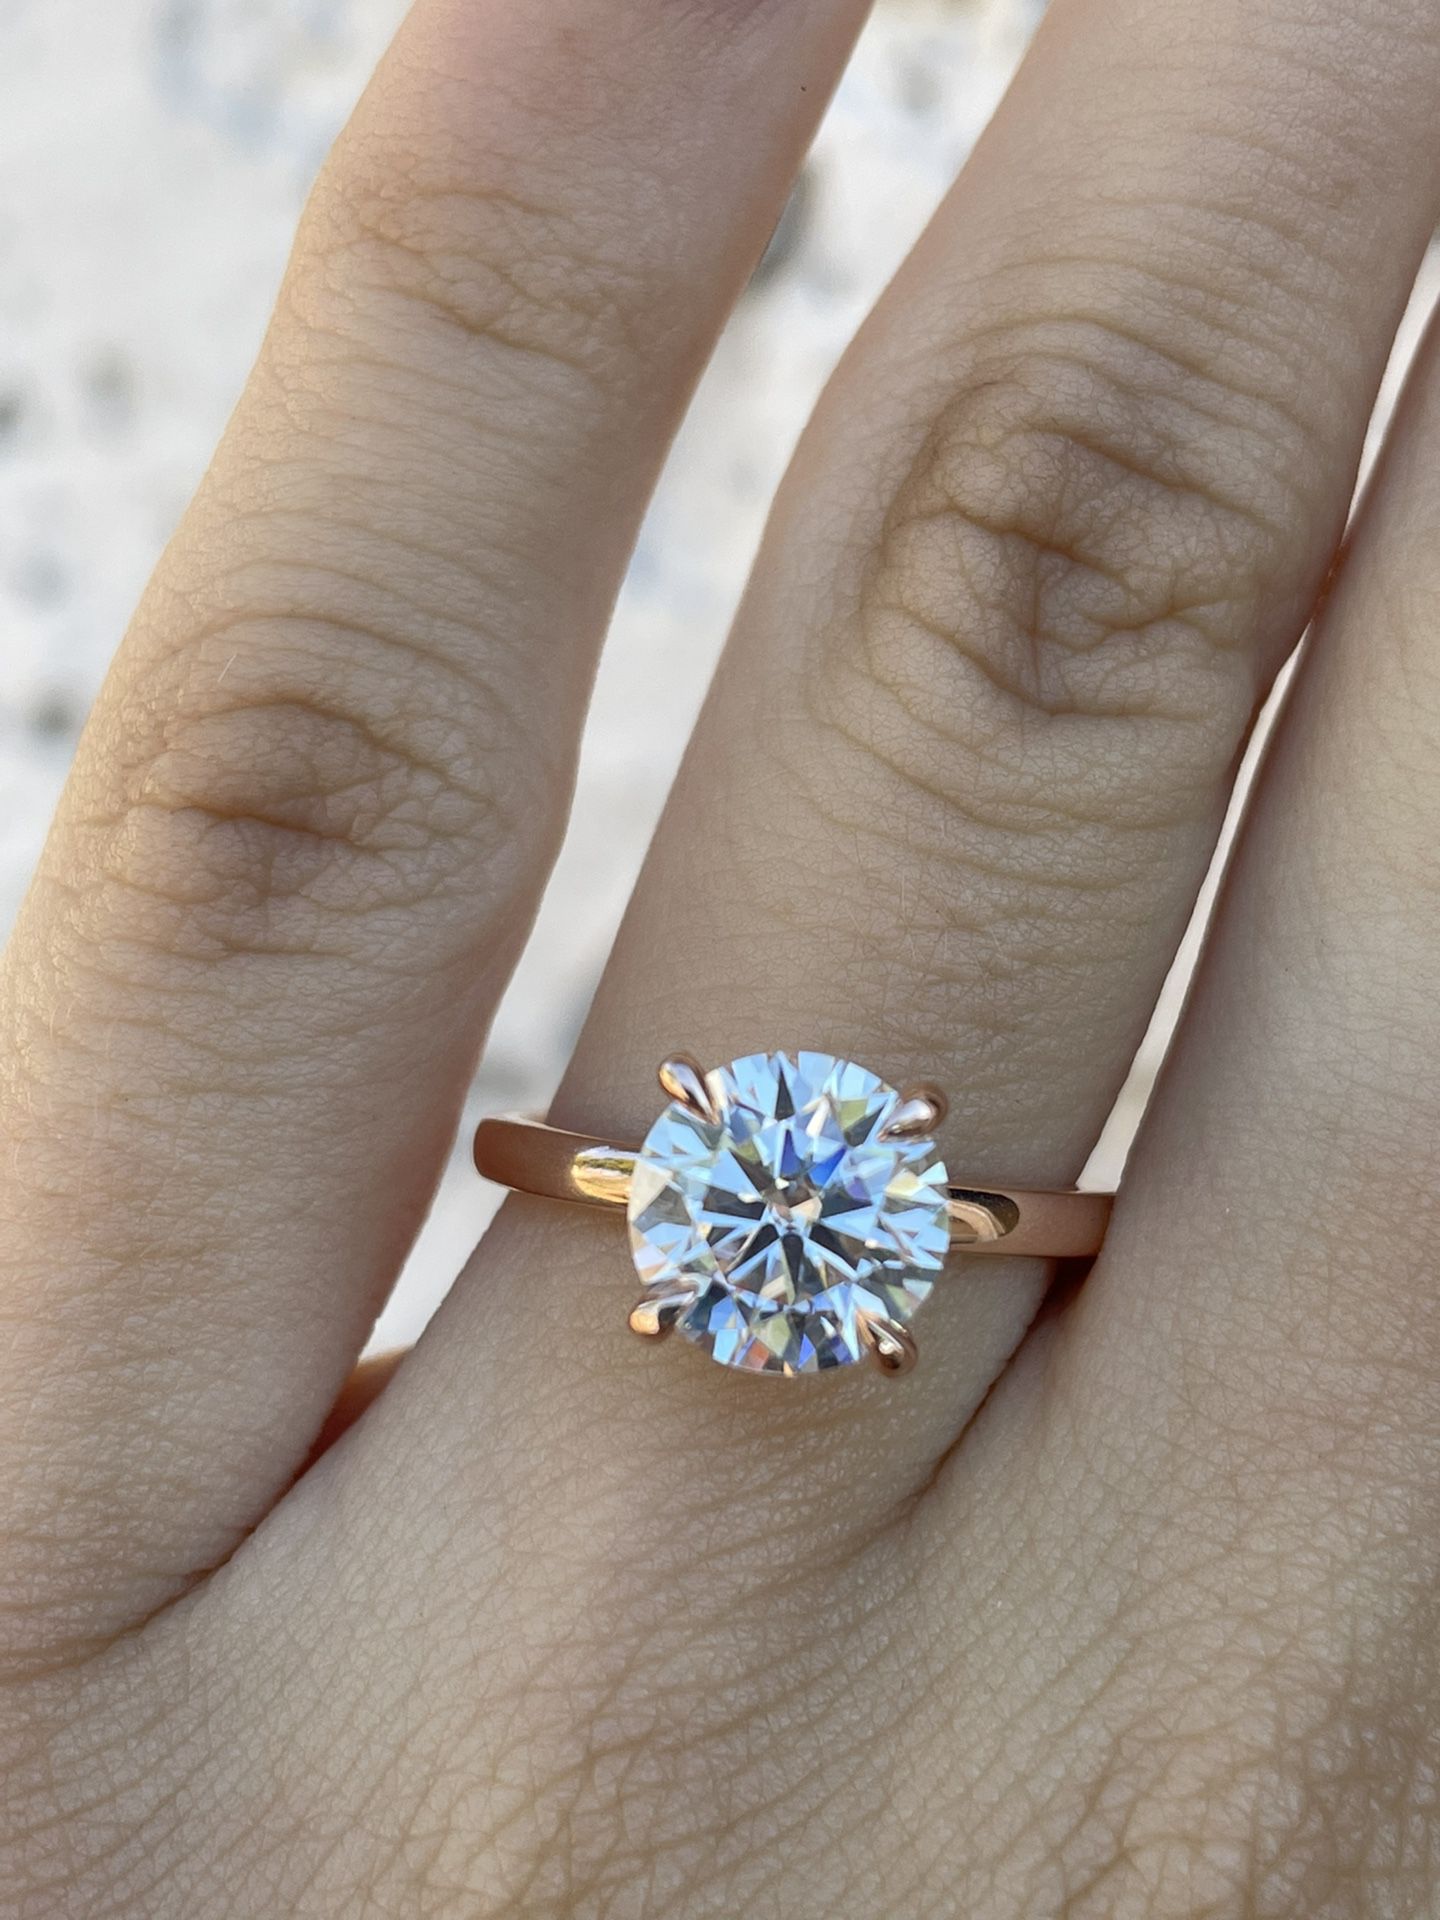 2 Carat Moissanite Diamond Engagement Ring Solitaire 